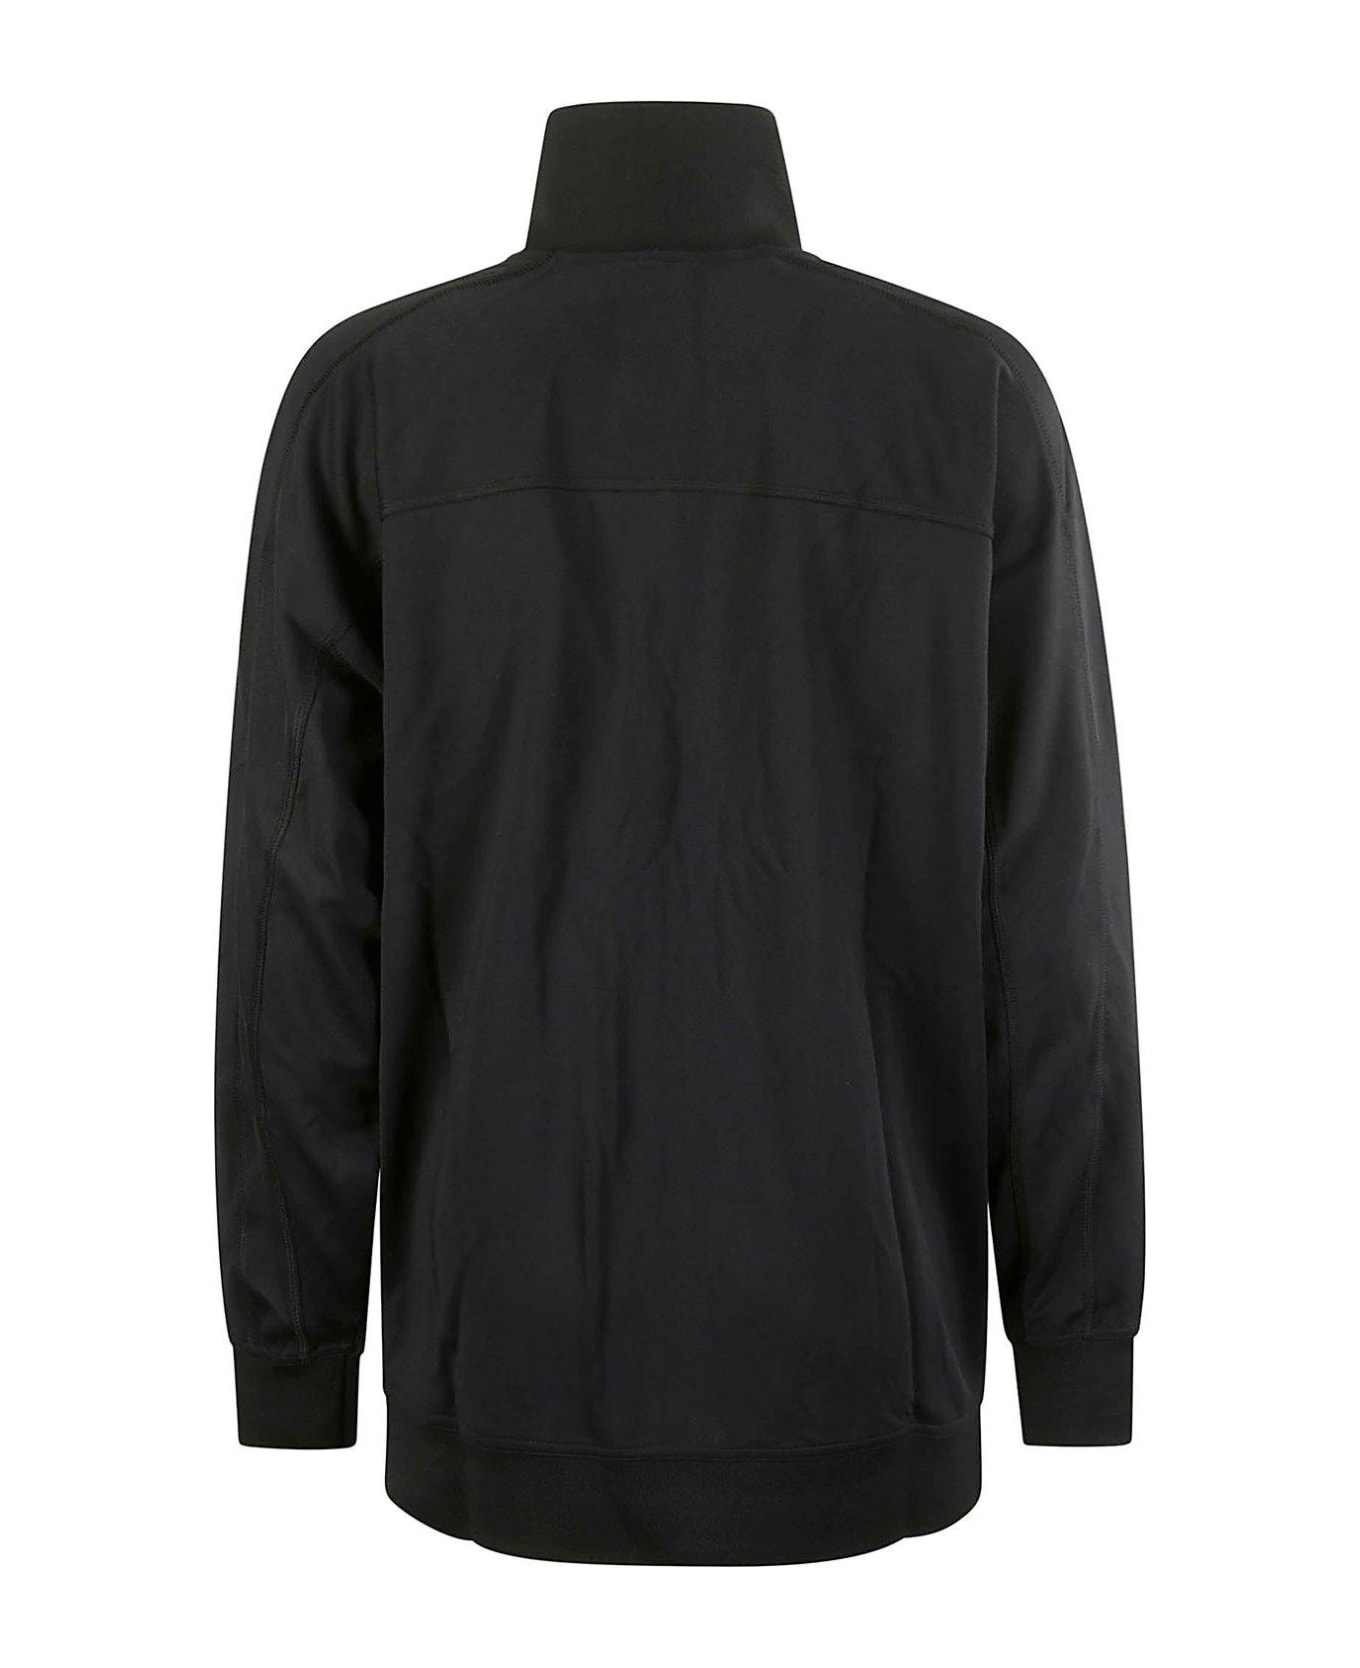 Adidas by Stella McCartney Truecasuals Zip-up Track Jacket - BLACK